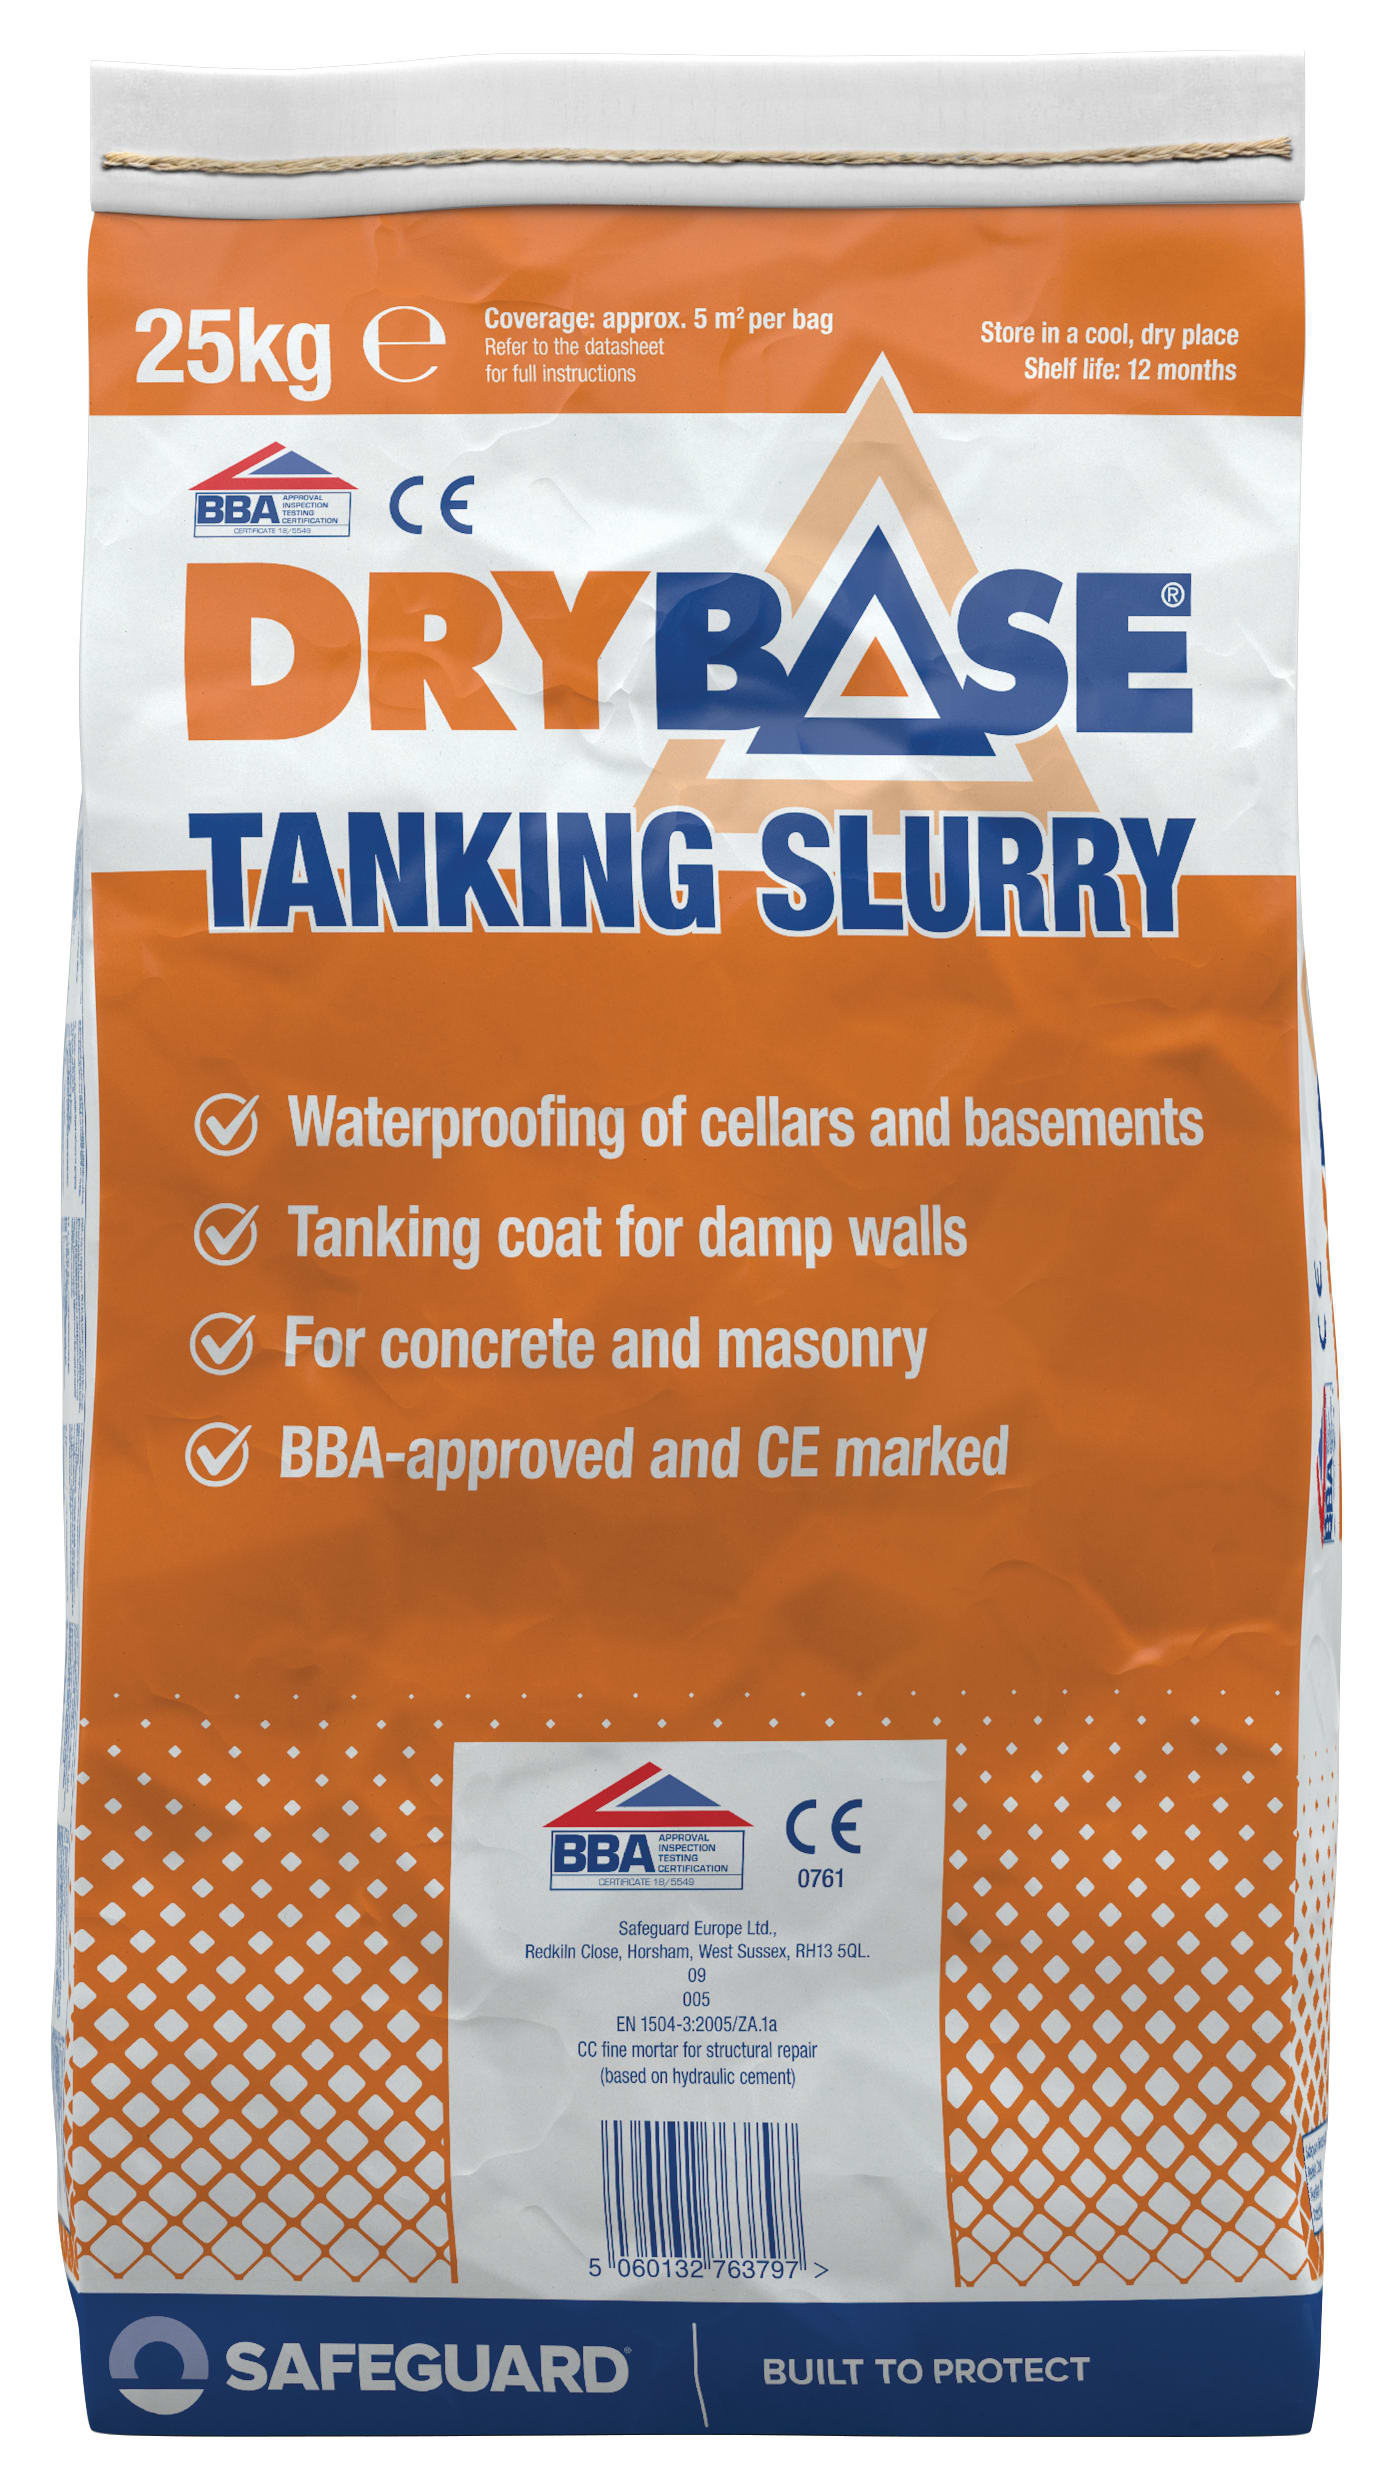 Drybase BBA Tanking Slurry - 25kg